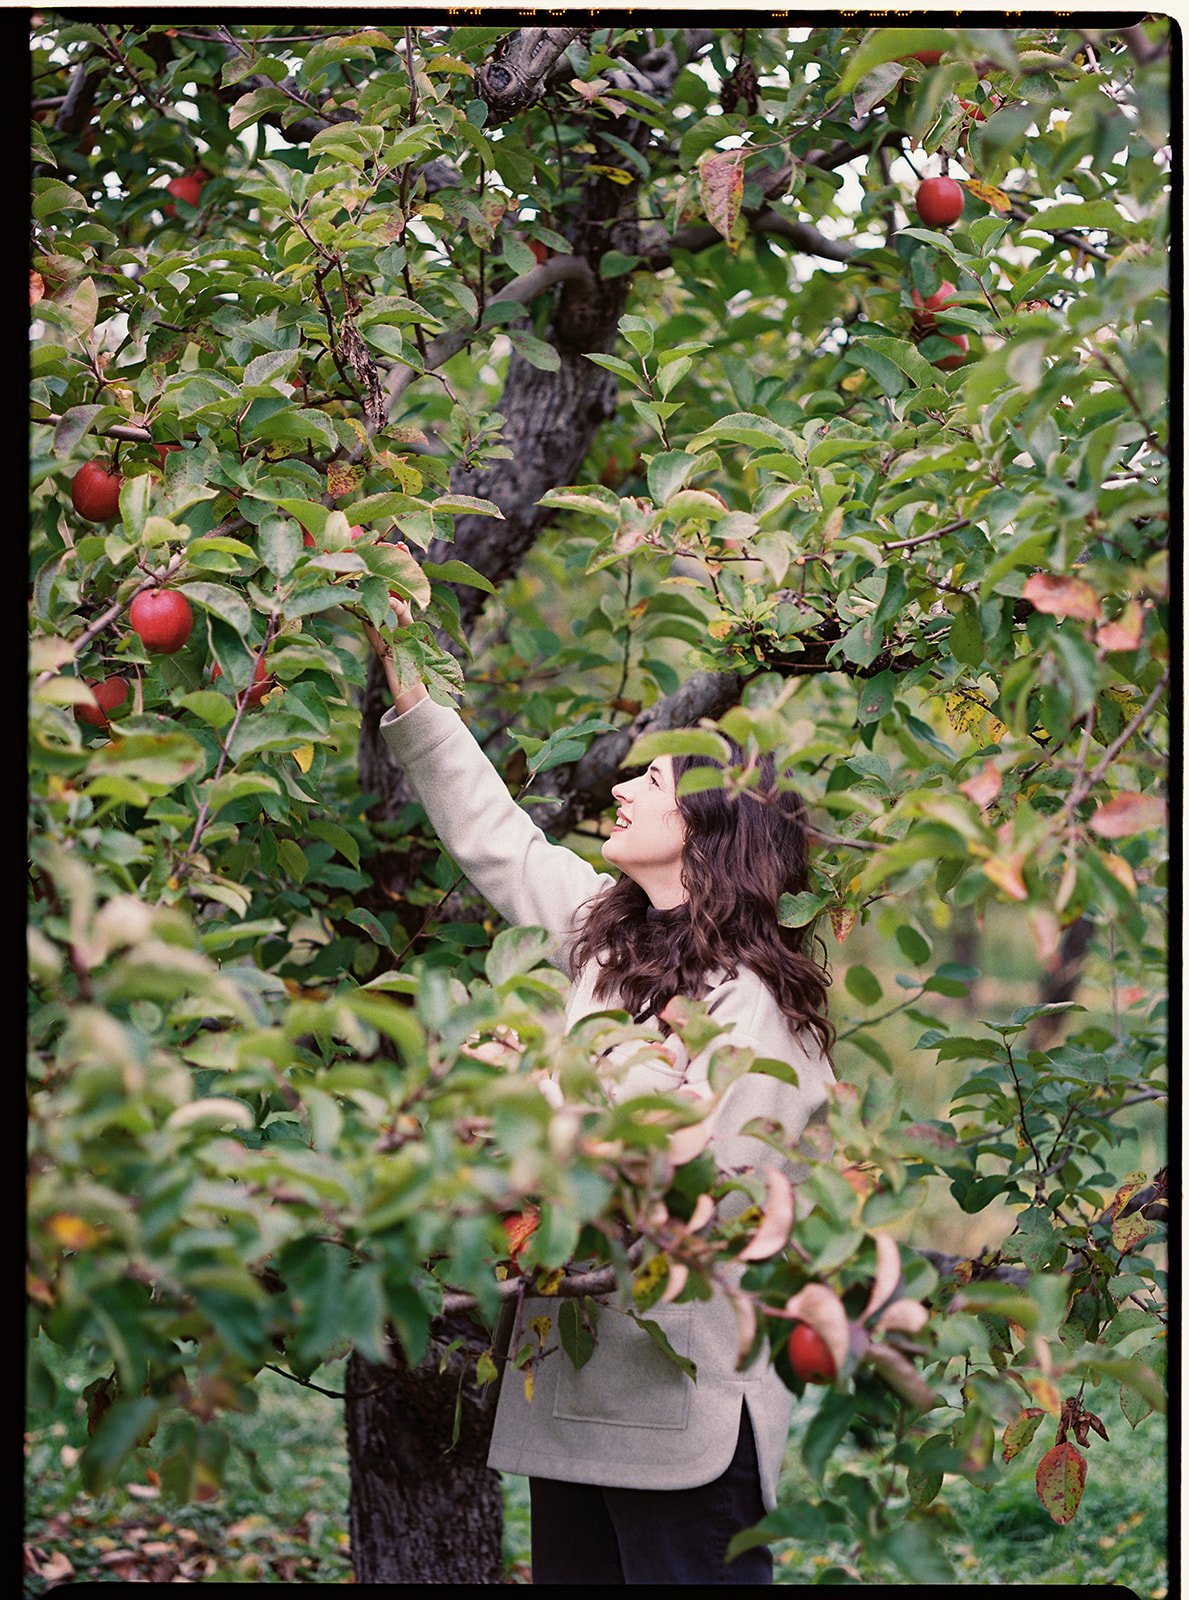 An Apple Picking Wedding Welcome Party - Destination Wedding Photographer - Film  (3).jpg